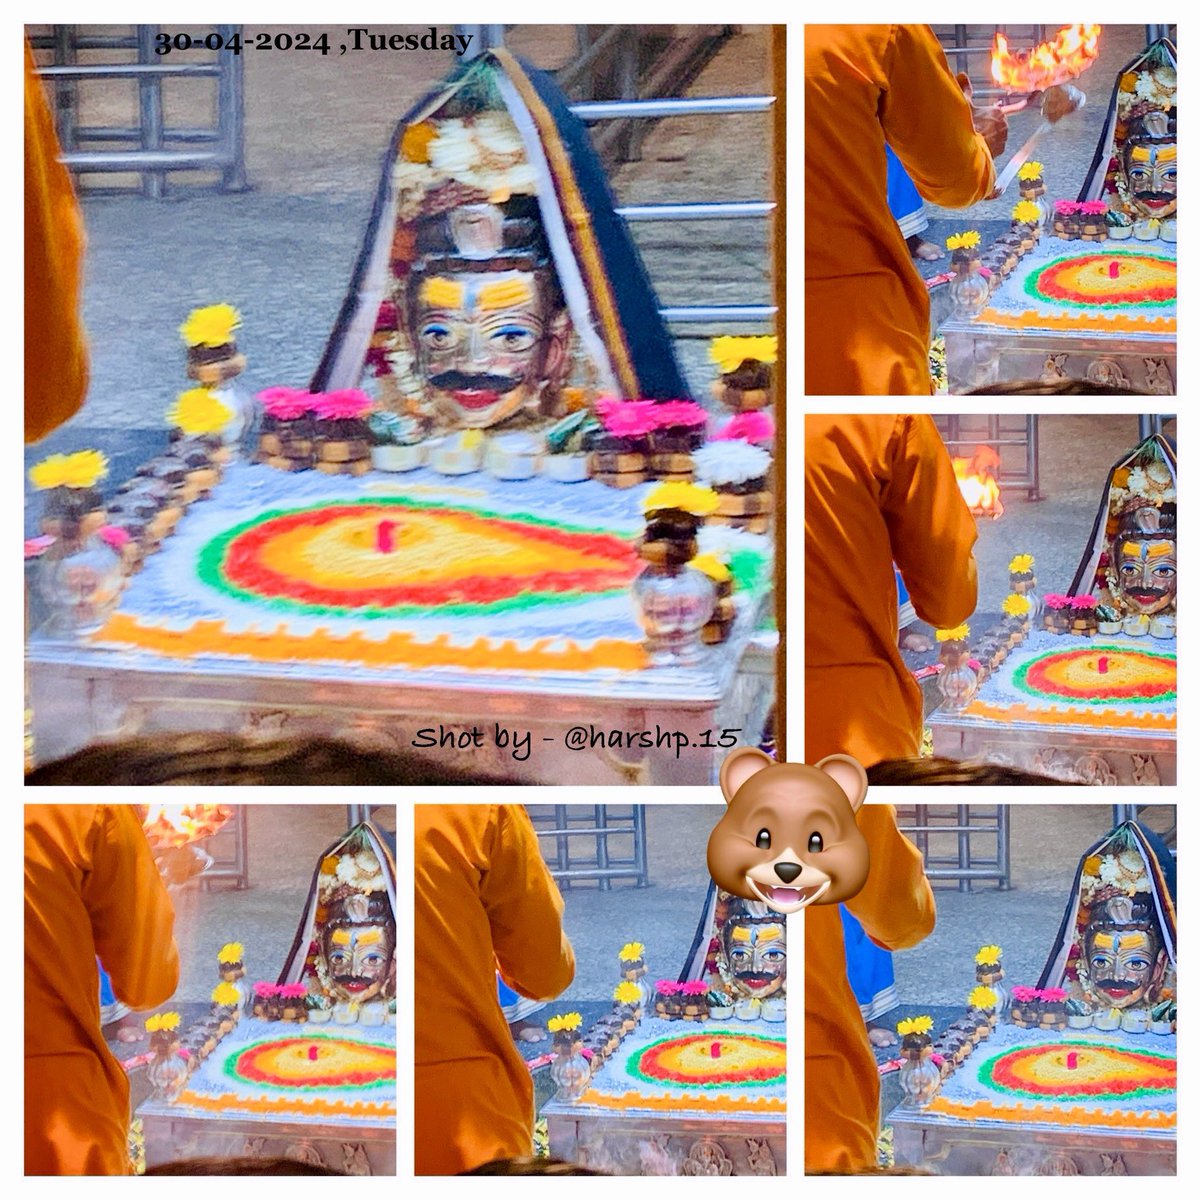 श्री आनंदेश्वराय नमः 🐻♥️✨
.
Shot by : @harshp_2001 
.
#shotoftheday #shotoniphone #photo #twitter #x #mondays #babaanandeshwartemple #peace #omnamahshivaya #kanpurcity #kanpurdiaries #kanpur #explore  #india #incredibleindia #spiritualjourney #sitaram